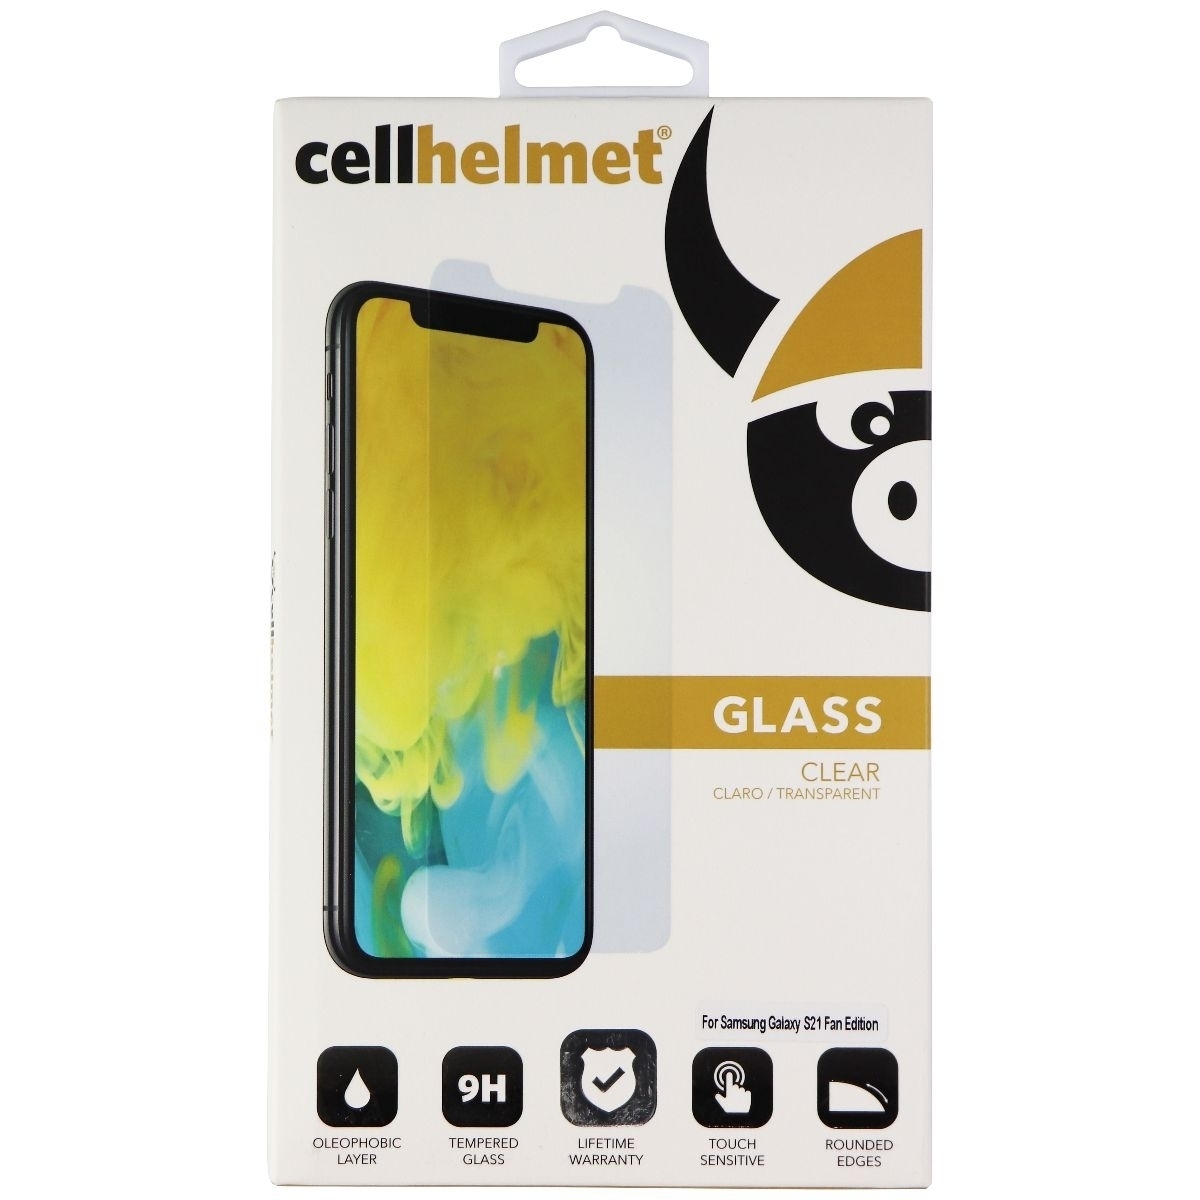 Cellhelmet Clear Glass Screen Protector For Samsung Galaxy S21 (Fan Edition)